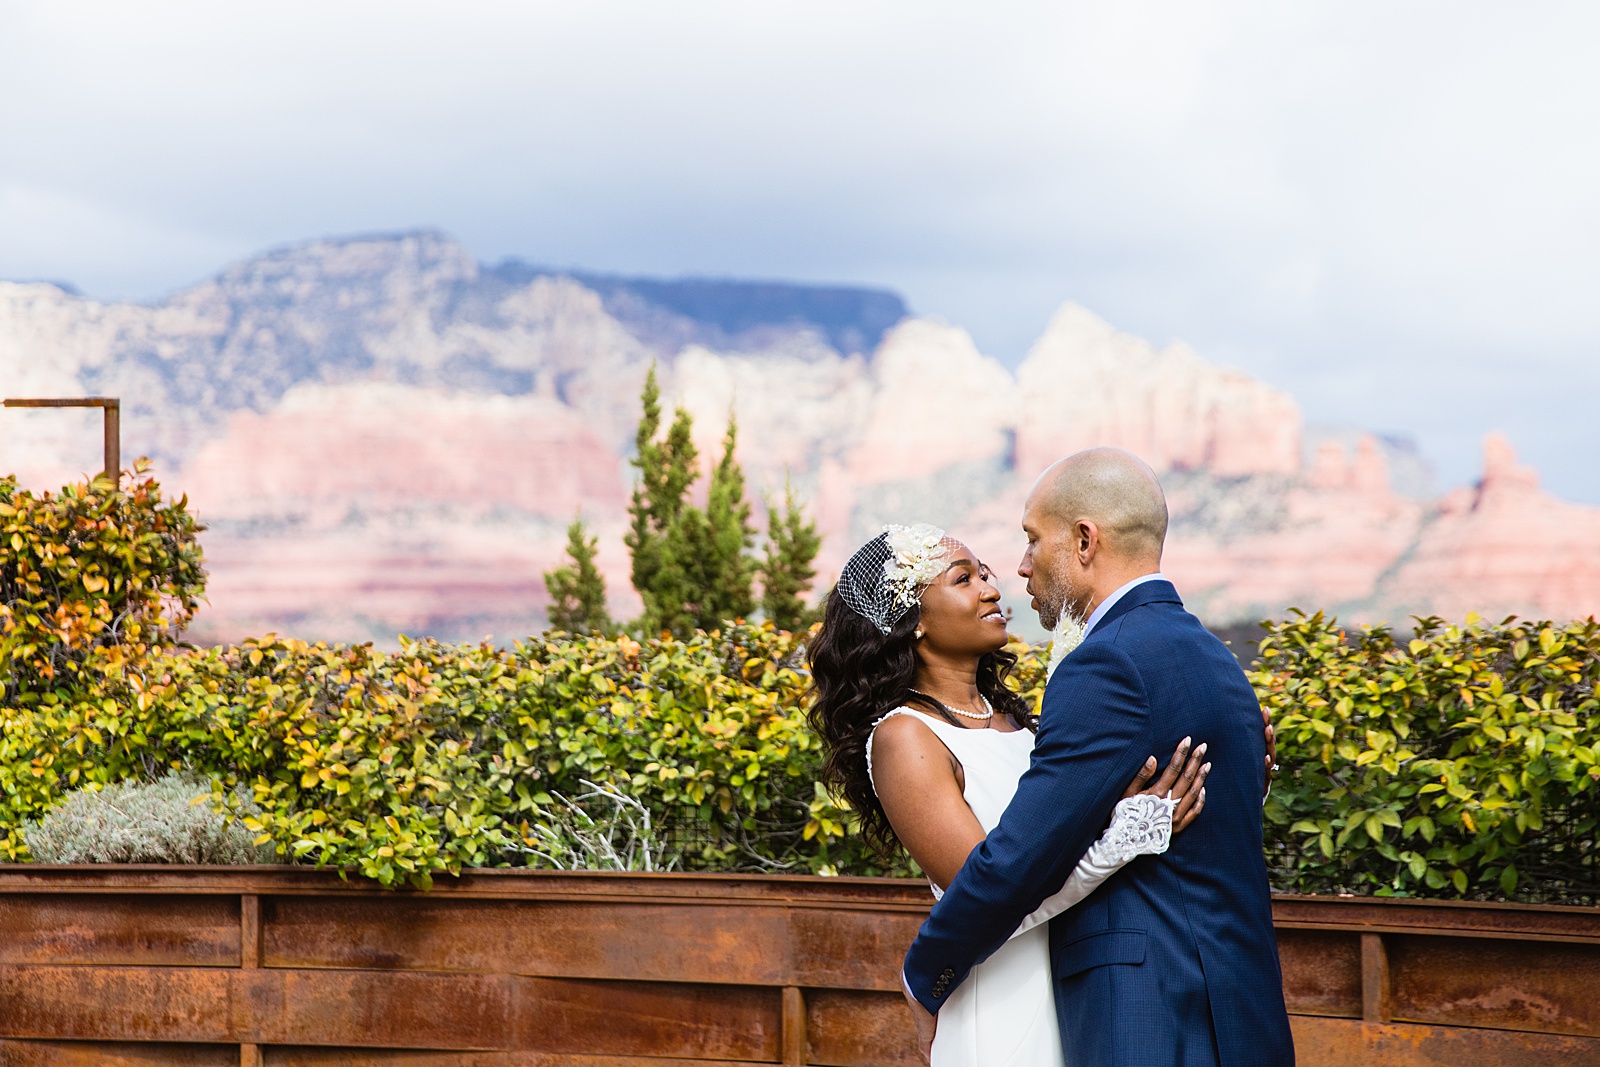 Newlyweds share an intimate moment at their Agave of Sedona wedding by Arizona wedding photographer PMA Photography.